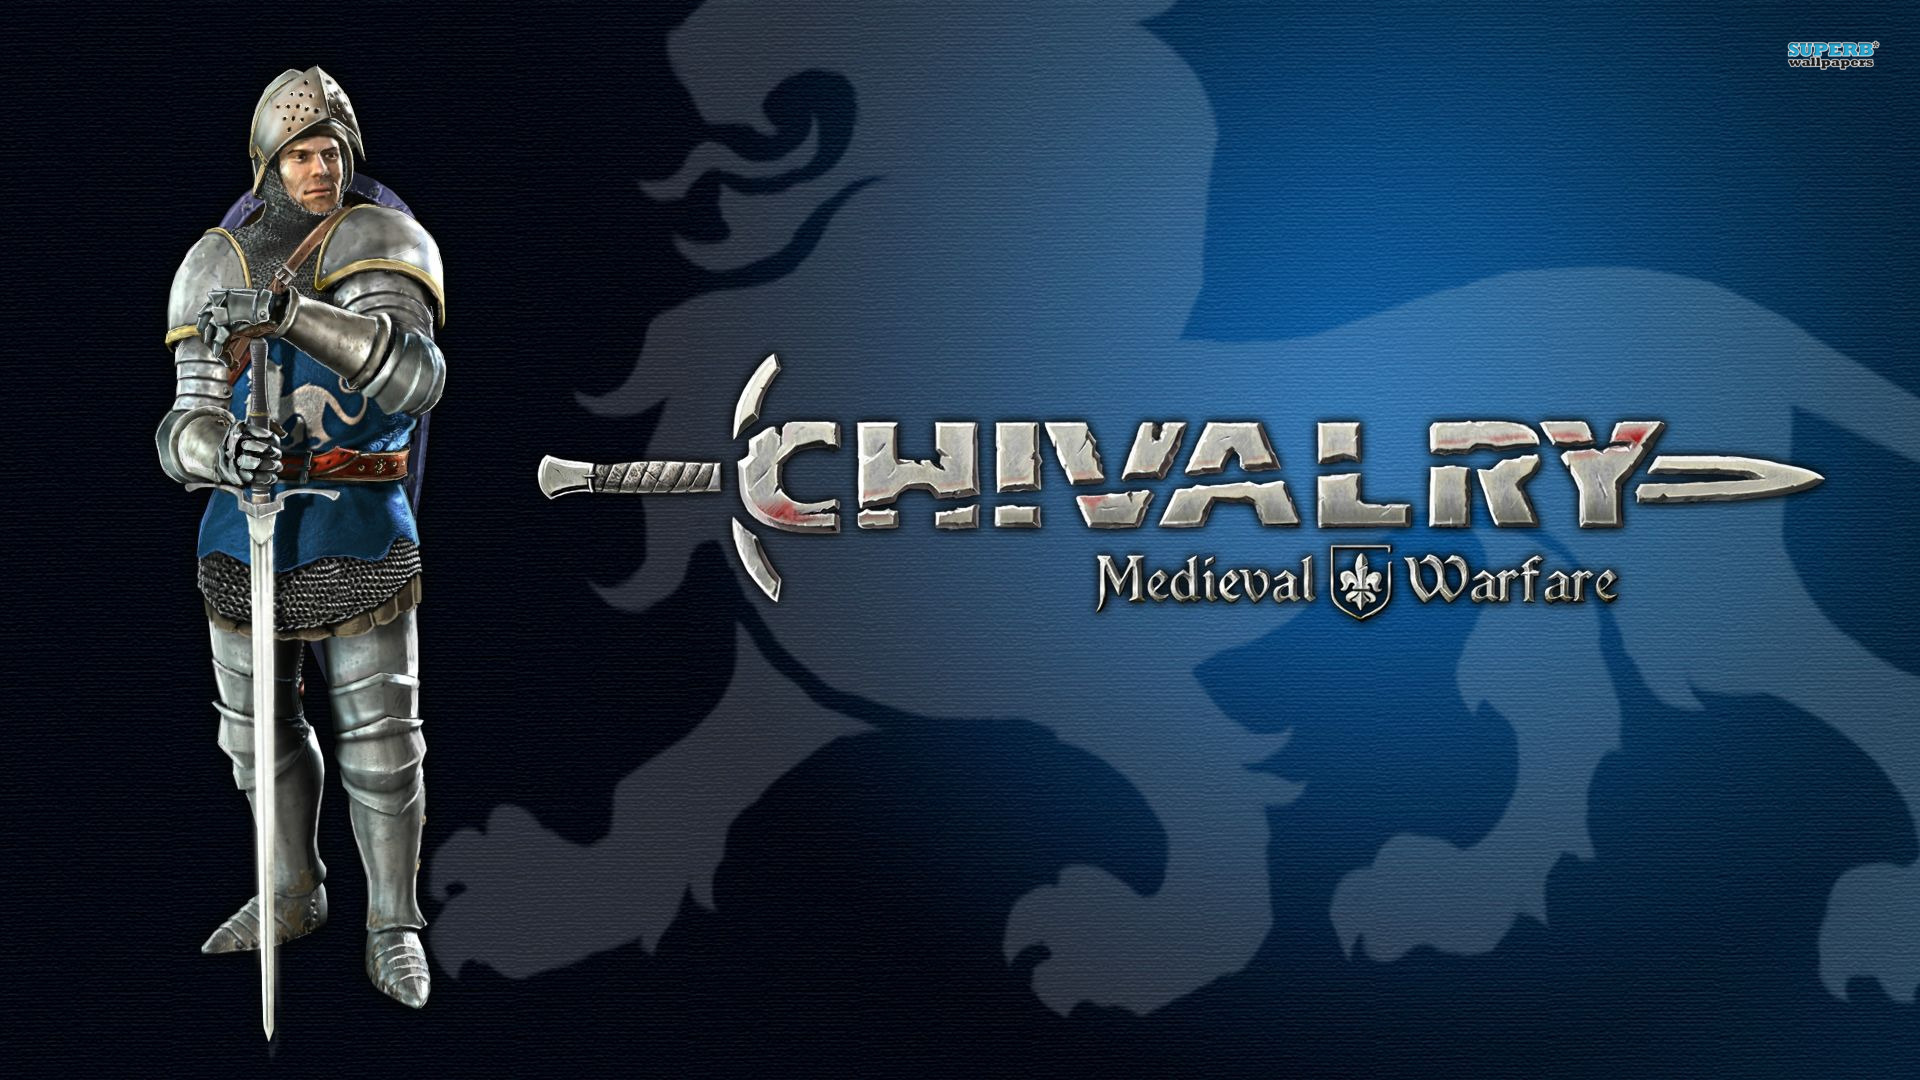 Chivalry Medieval Warfare Hd Wallpaper Background Image